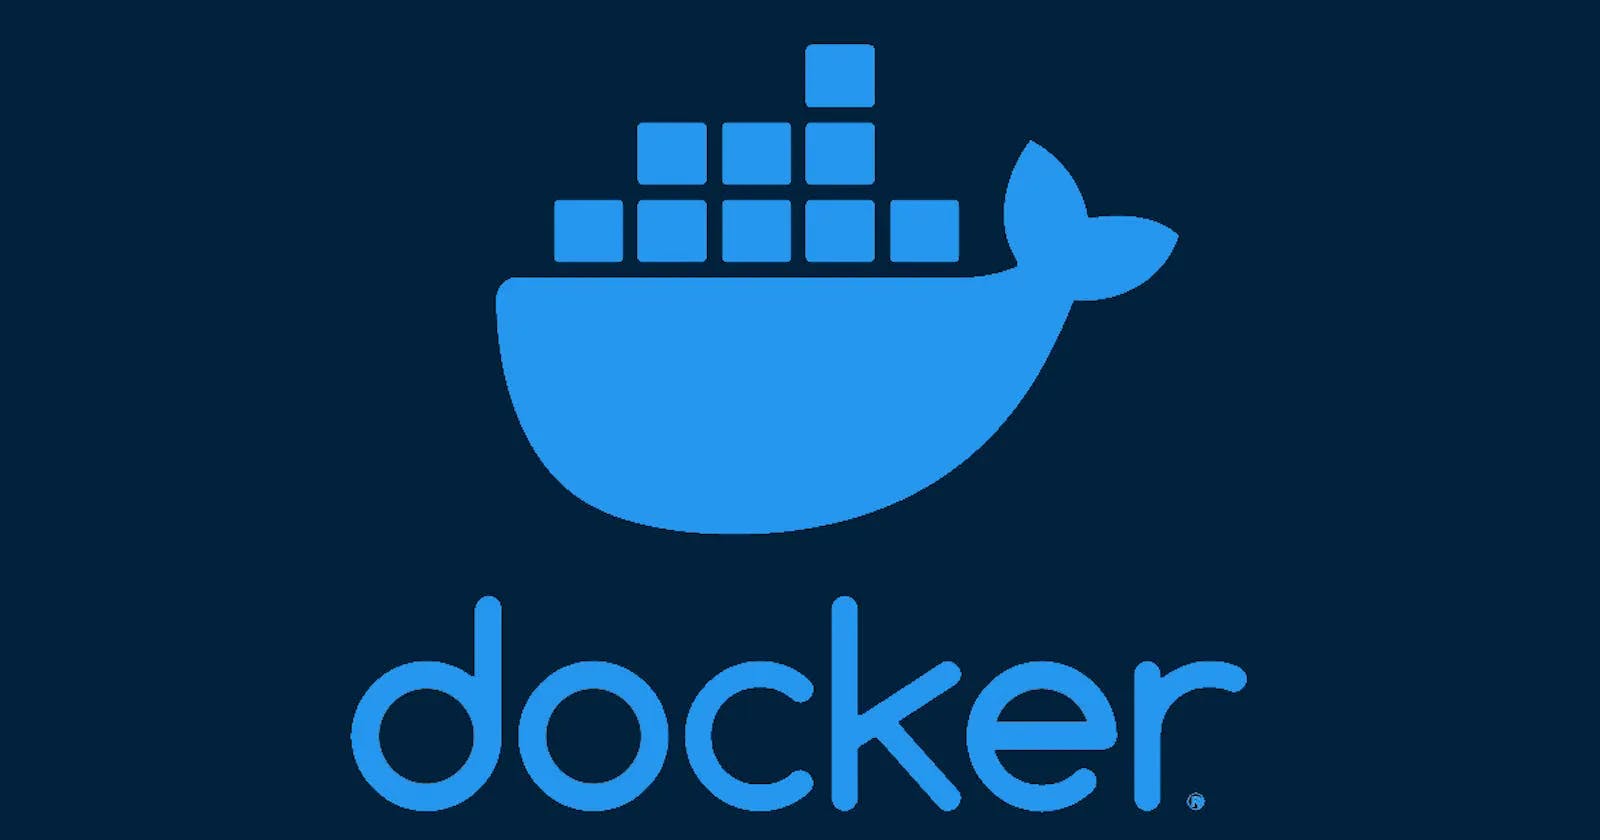 Intro to Docker